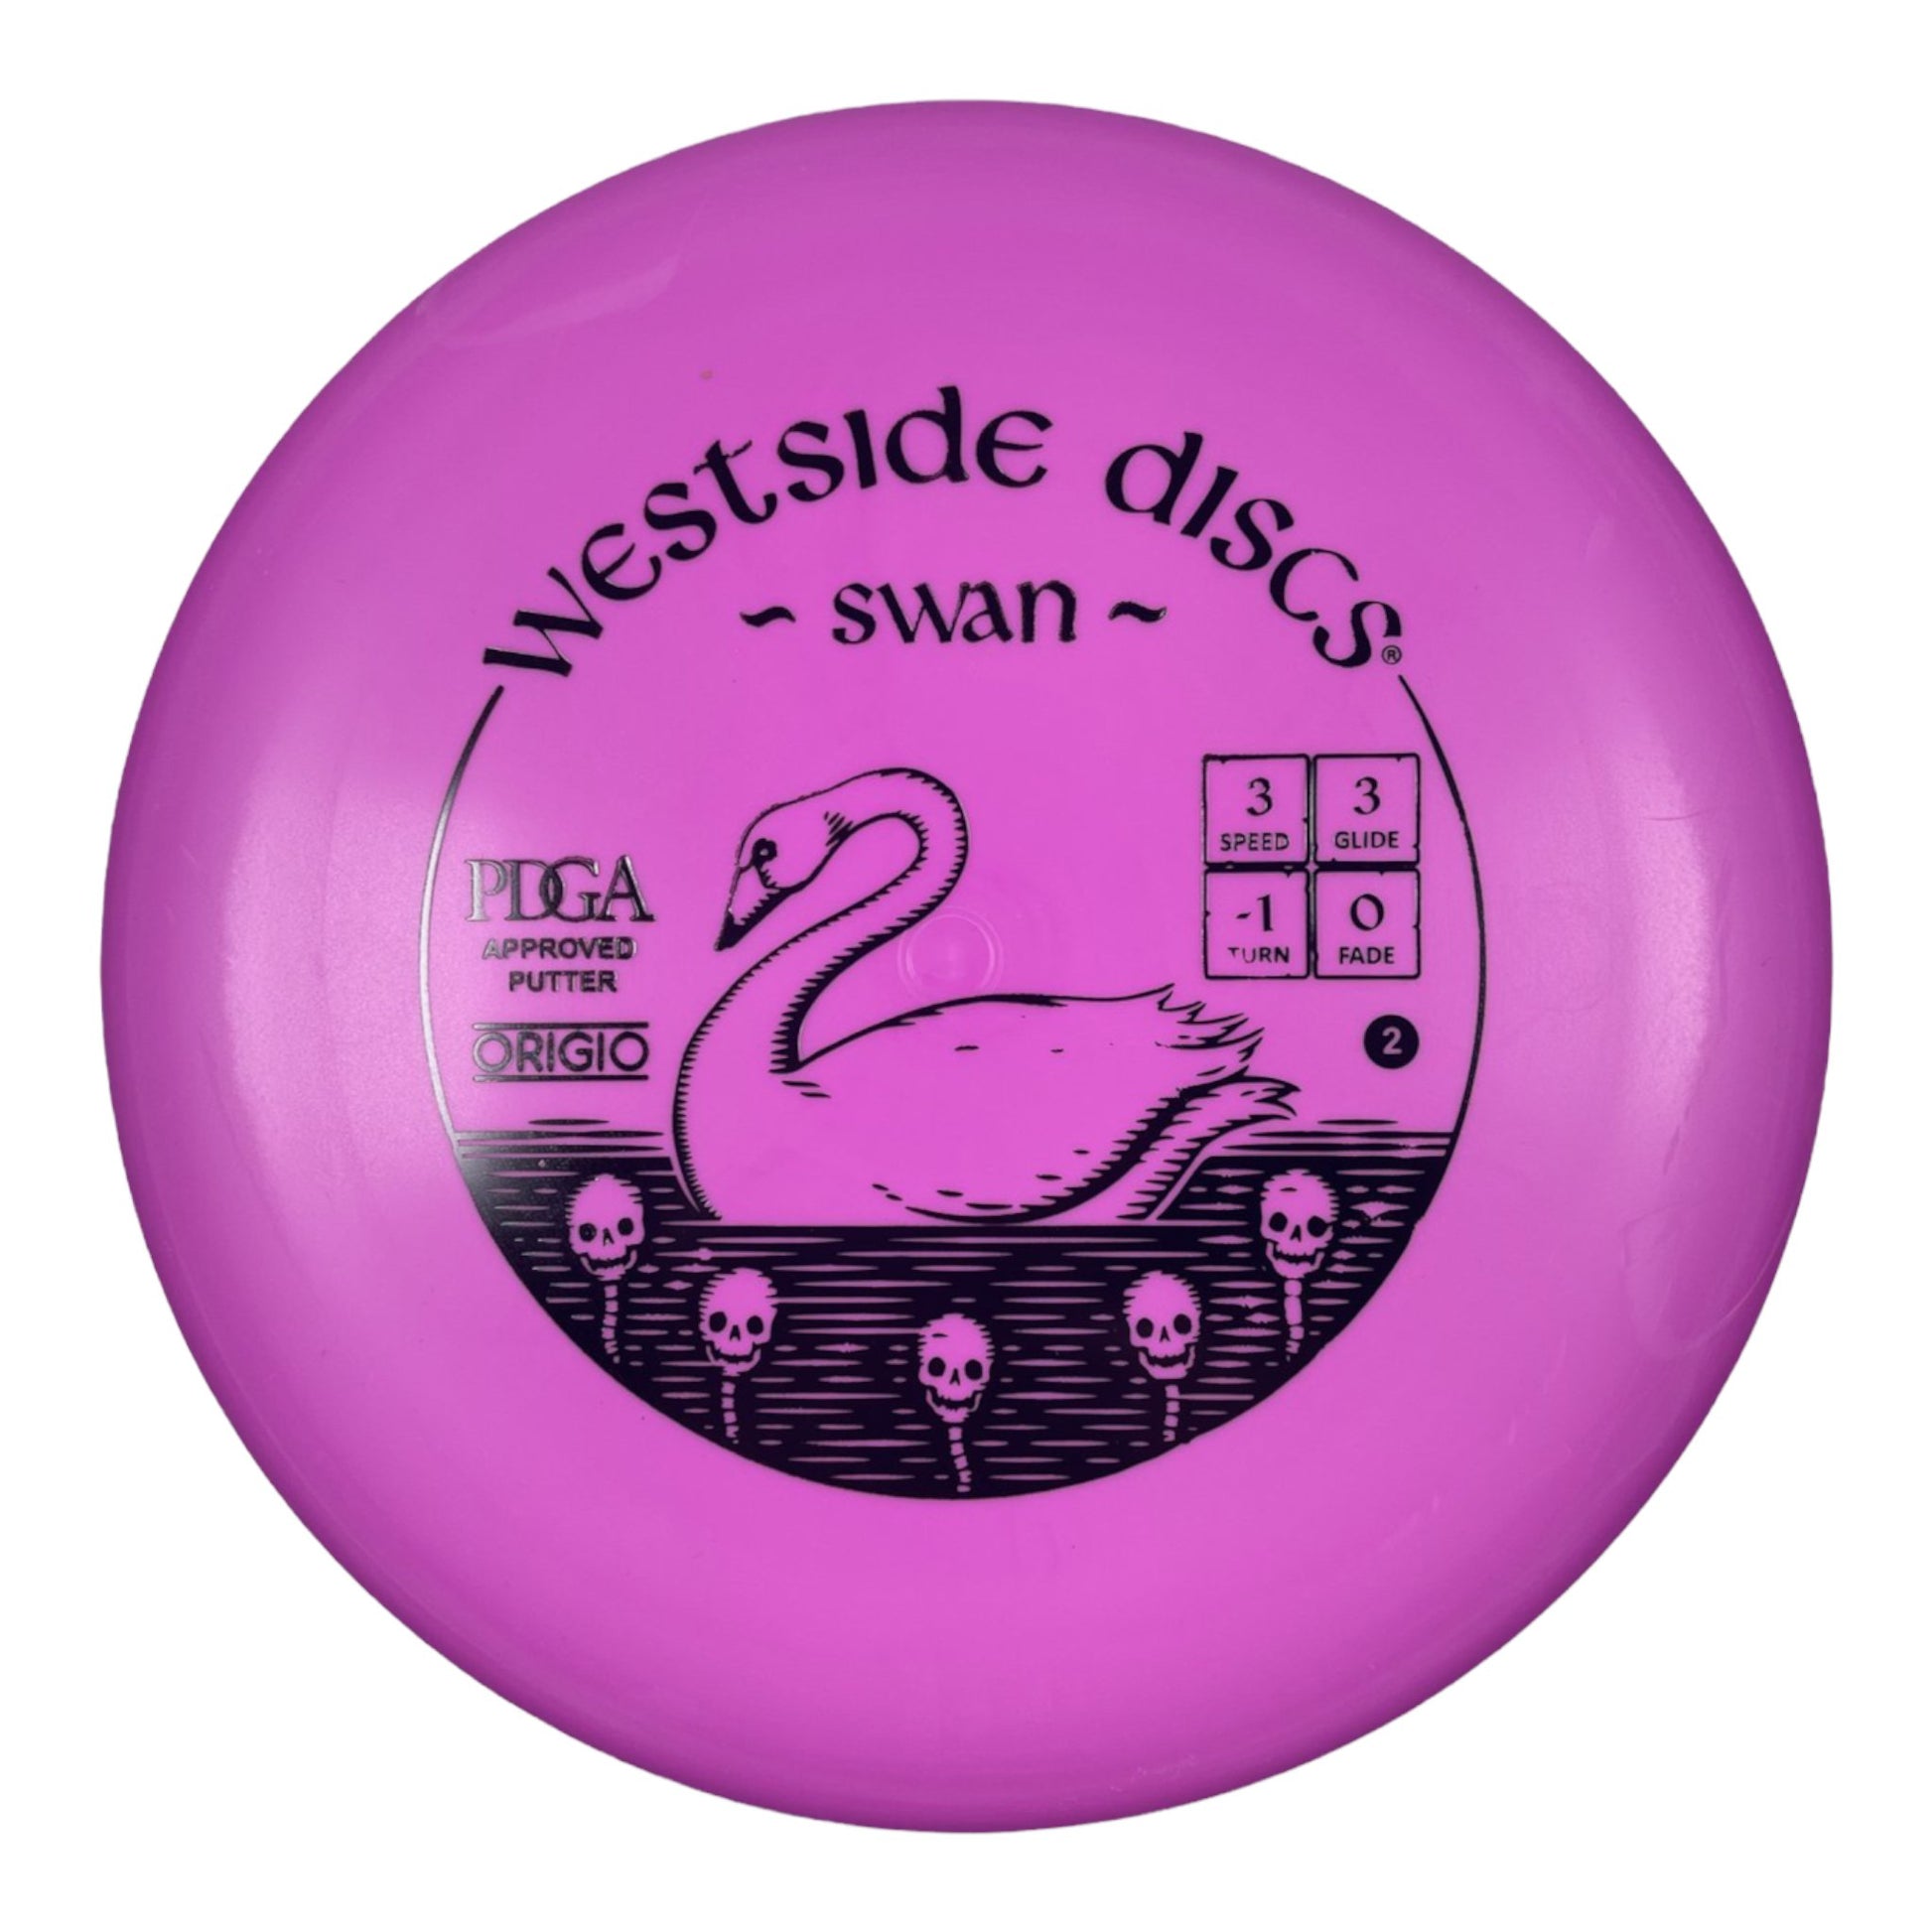 Westside Discs Swan | Origio | Pink/Black 175g Disc Golf